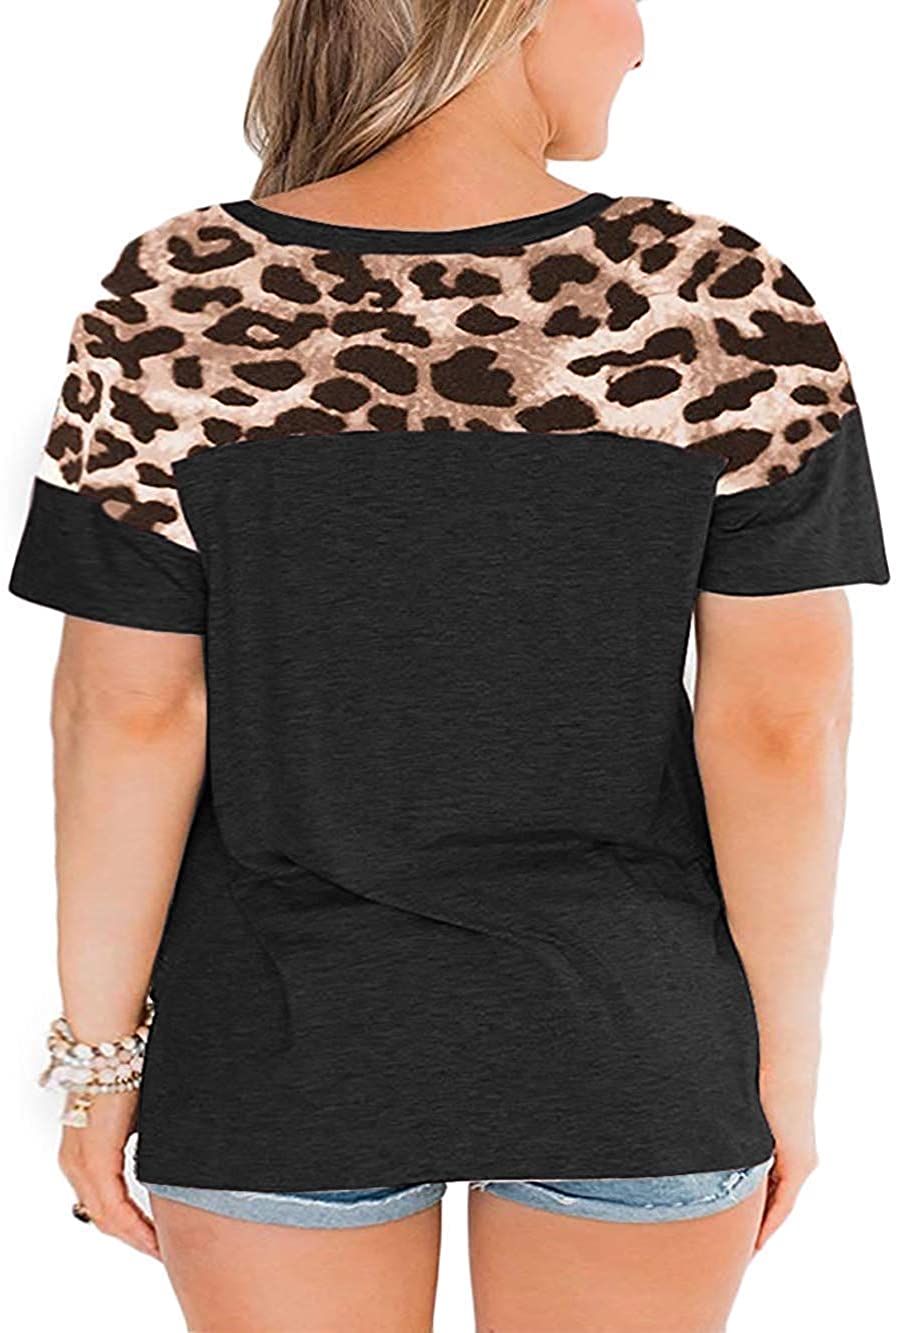 CCBSTS Womens Plus Size Leopard Print T Shirts Patchwork ...